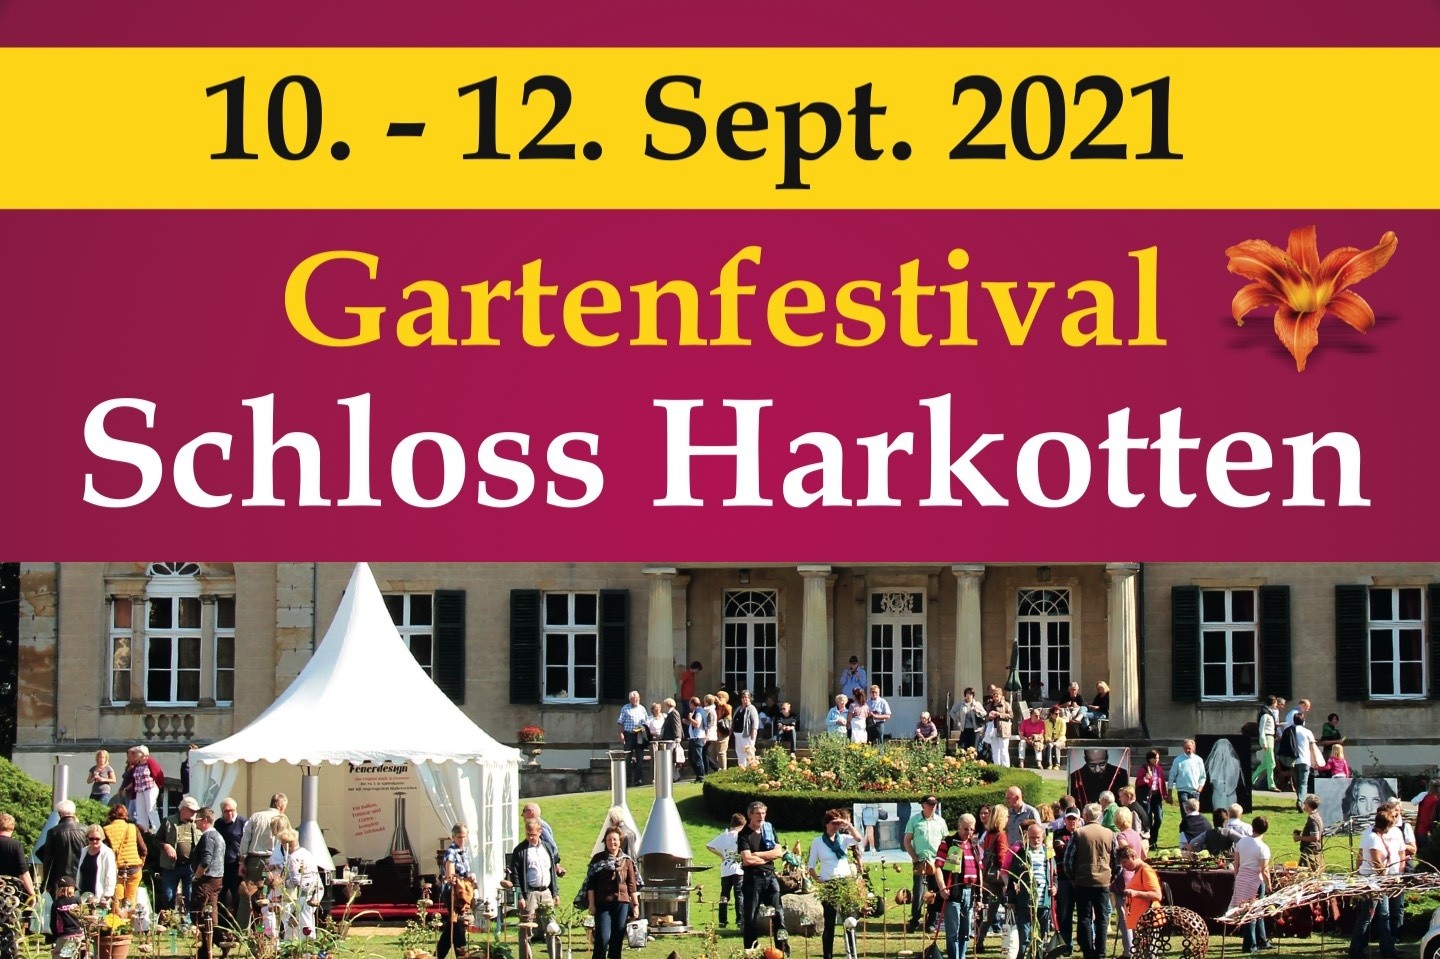 Gartenfestival,Pflanzen,Dekoration,Wohn- und Gartenaccessoires,Kunst,Schloss Harkotten,